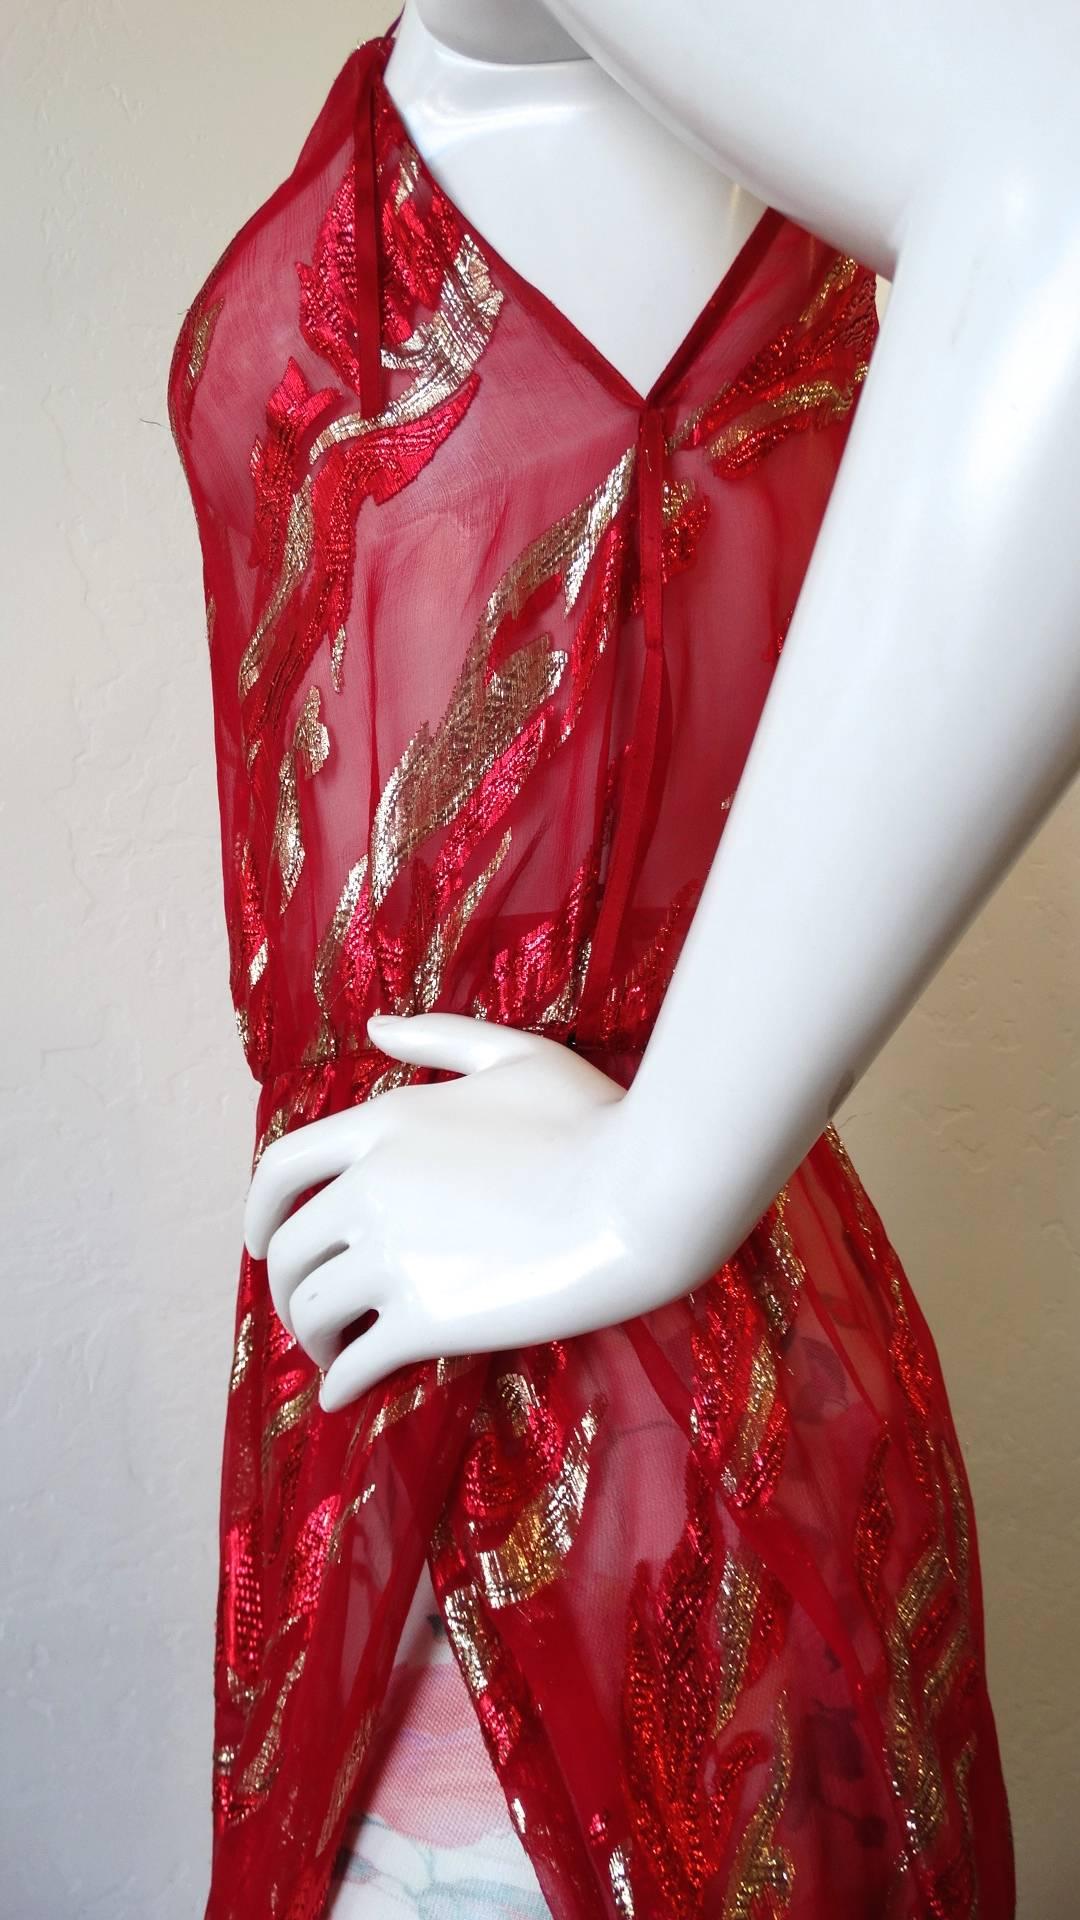 Saint Laurent Rive Gauche Red Sheer Printed Halter Dress, 1980s  8